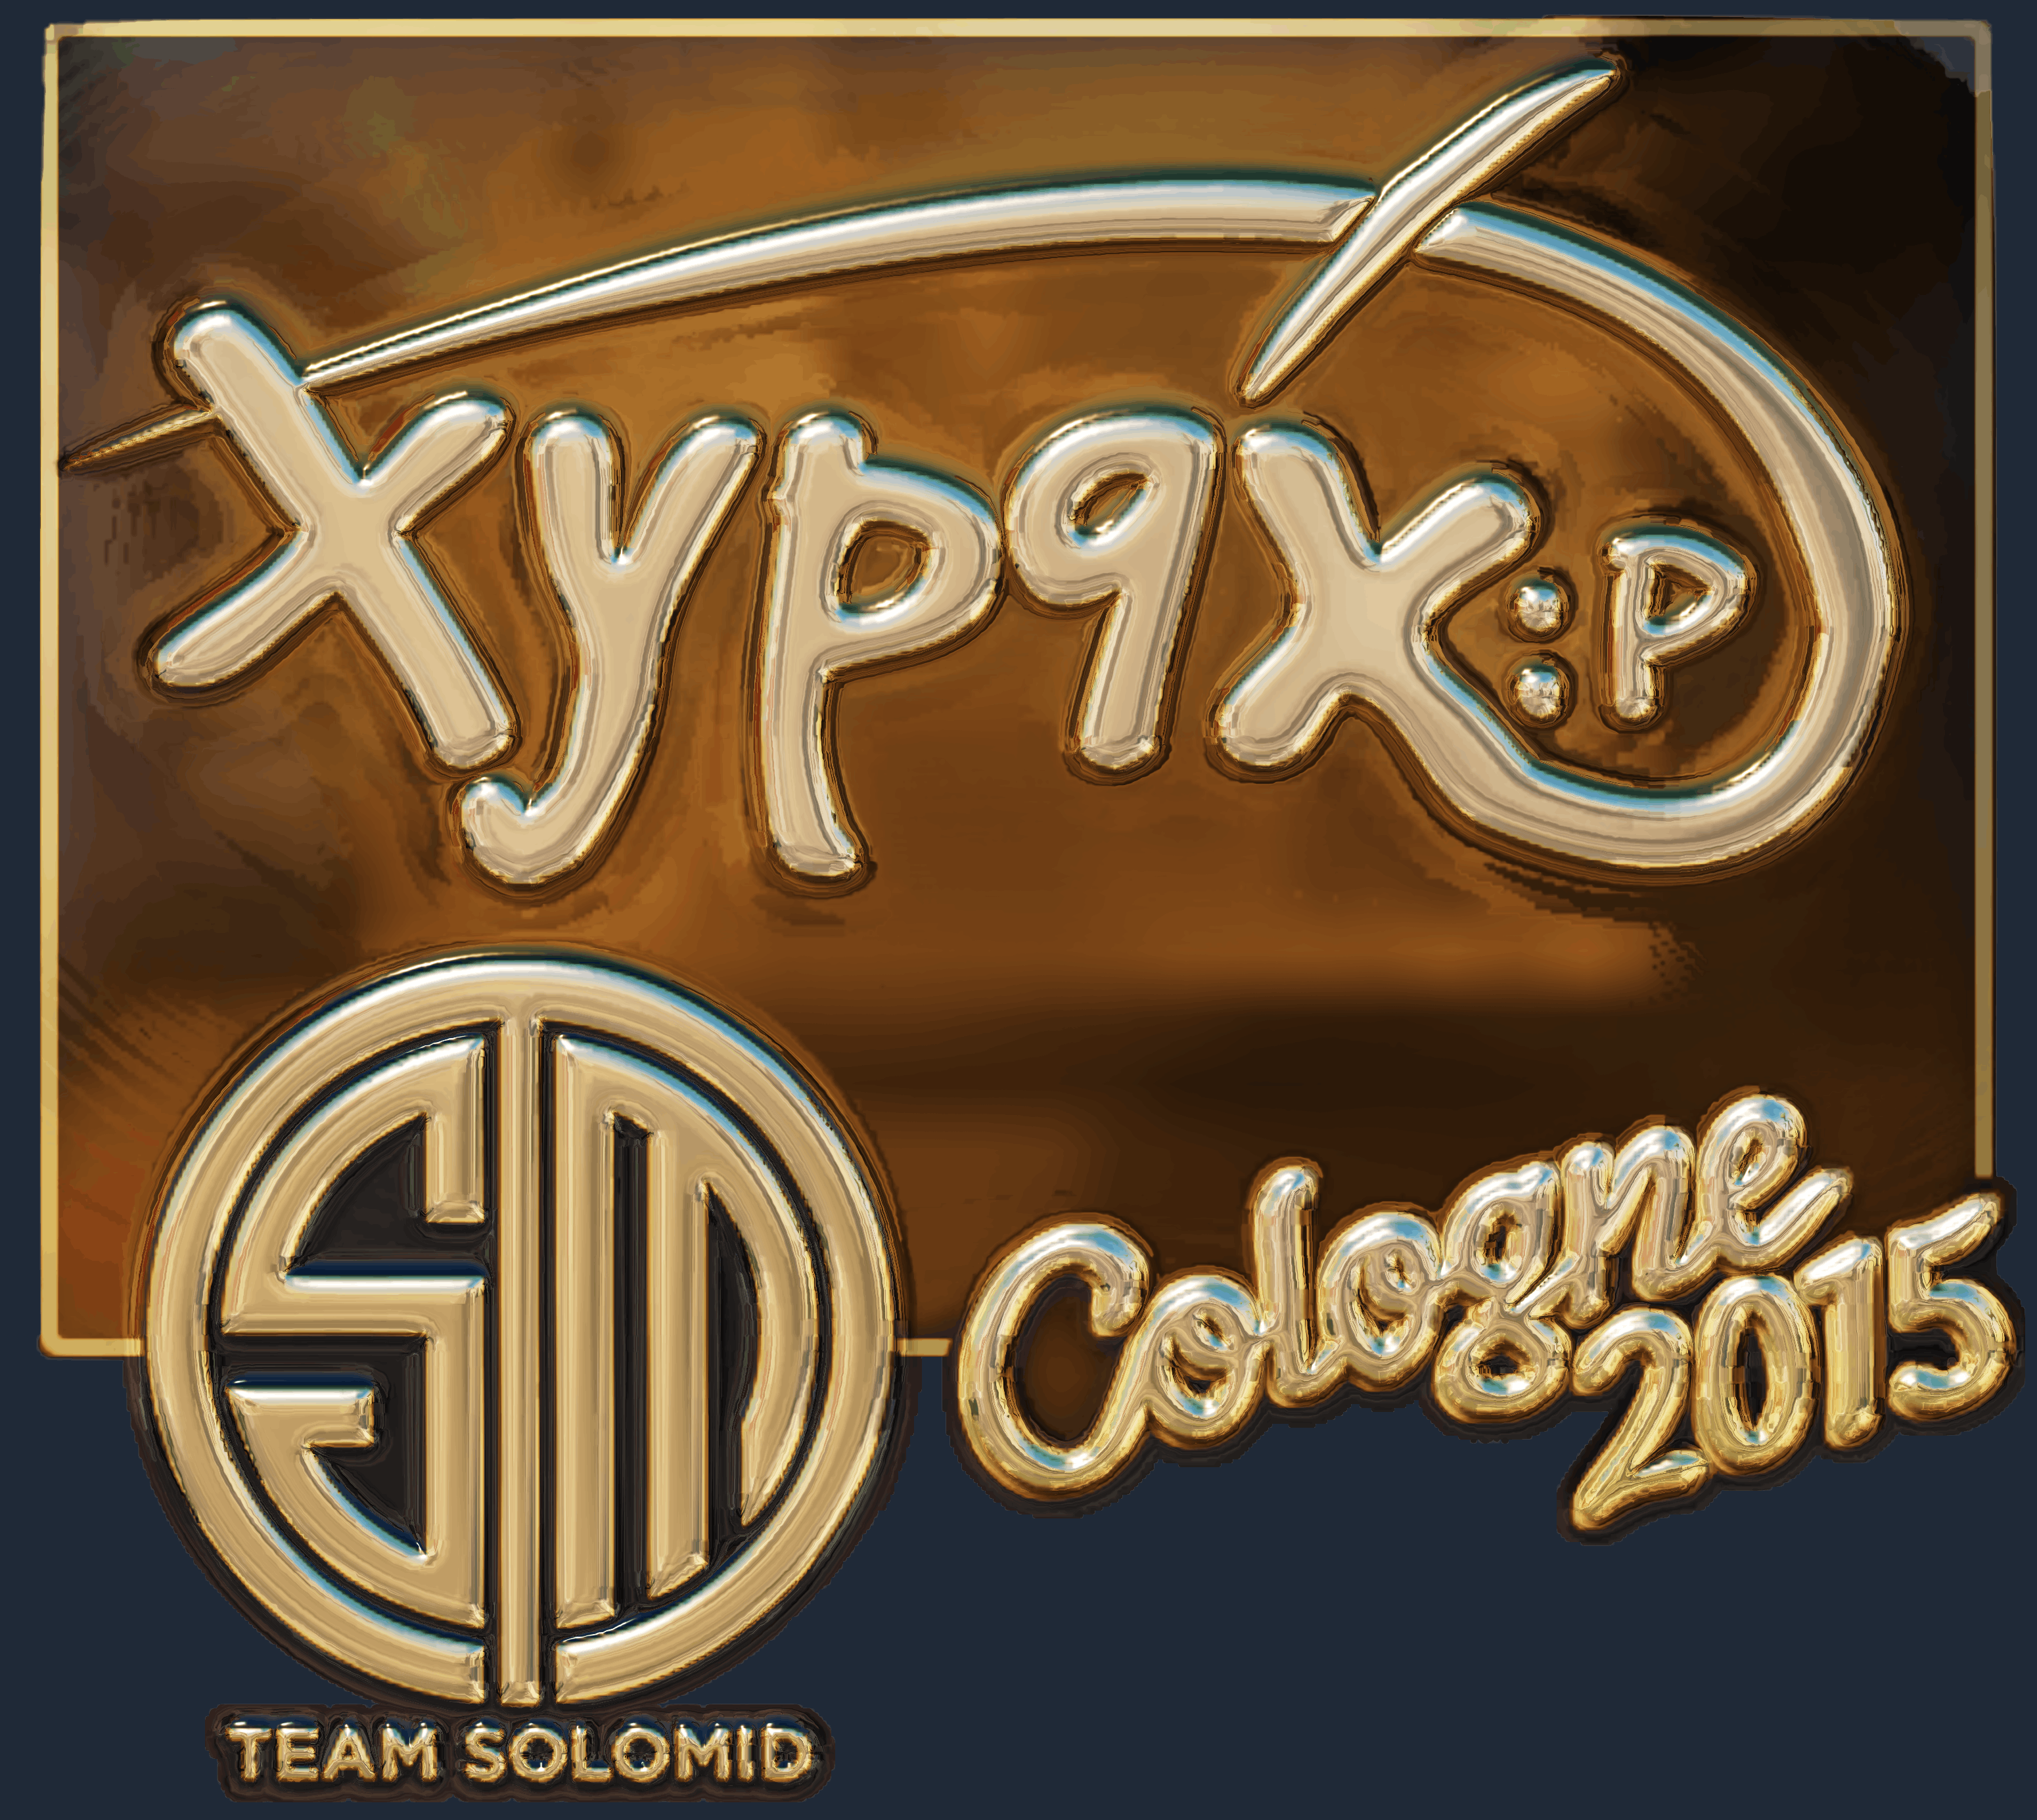 Sticker | Xyp9x (Gold) | Cologne 2015 Screenshot